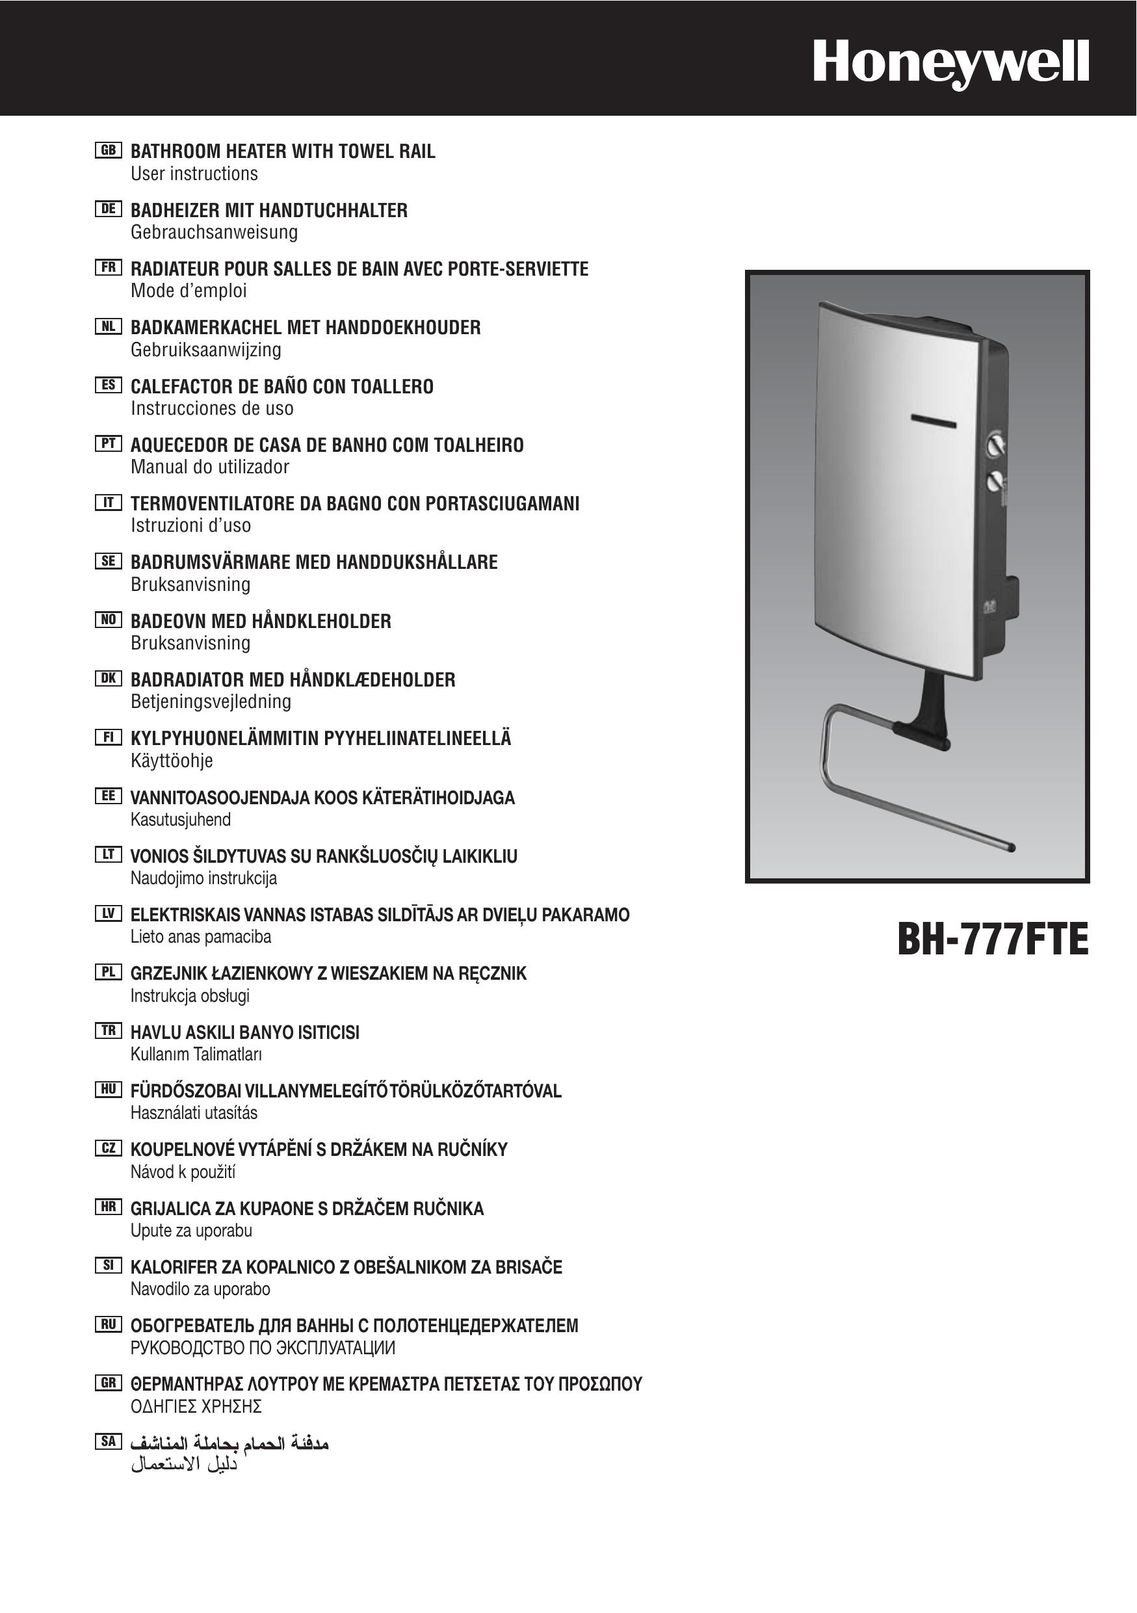 Honeywell BH-777FTE Water Heater User Manual